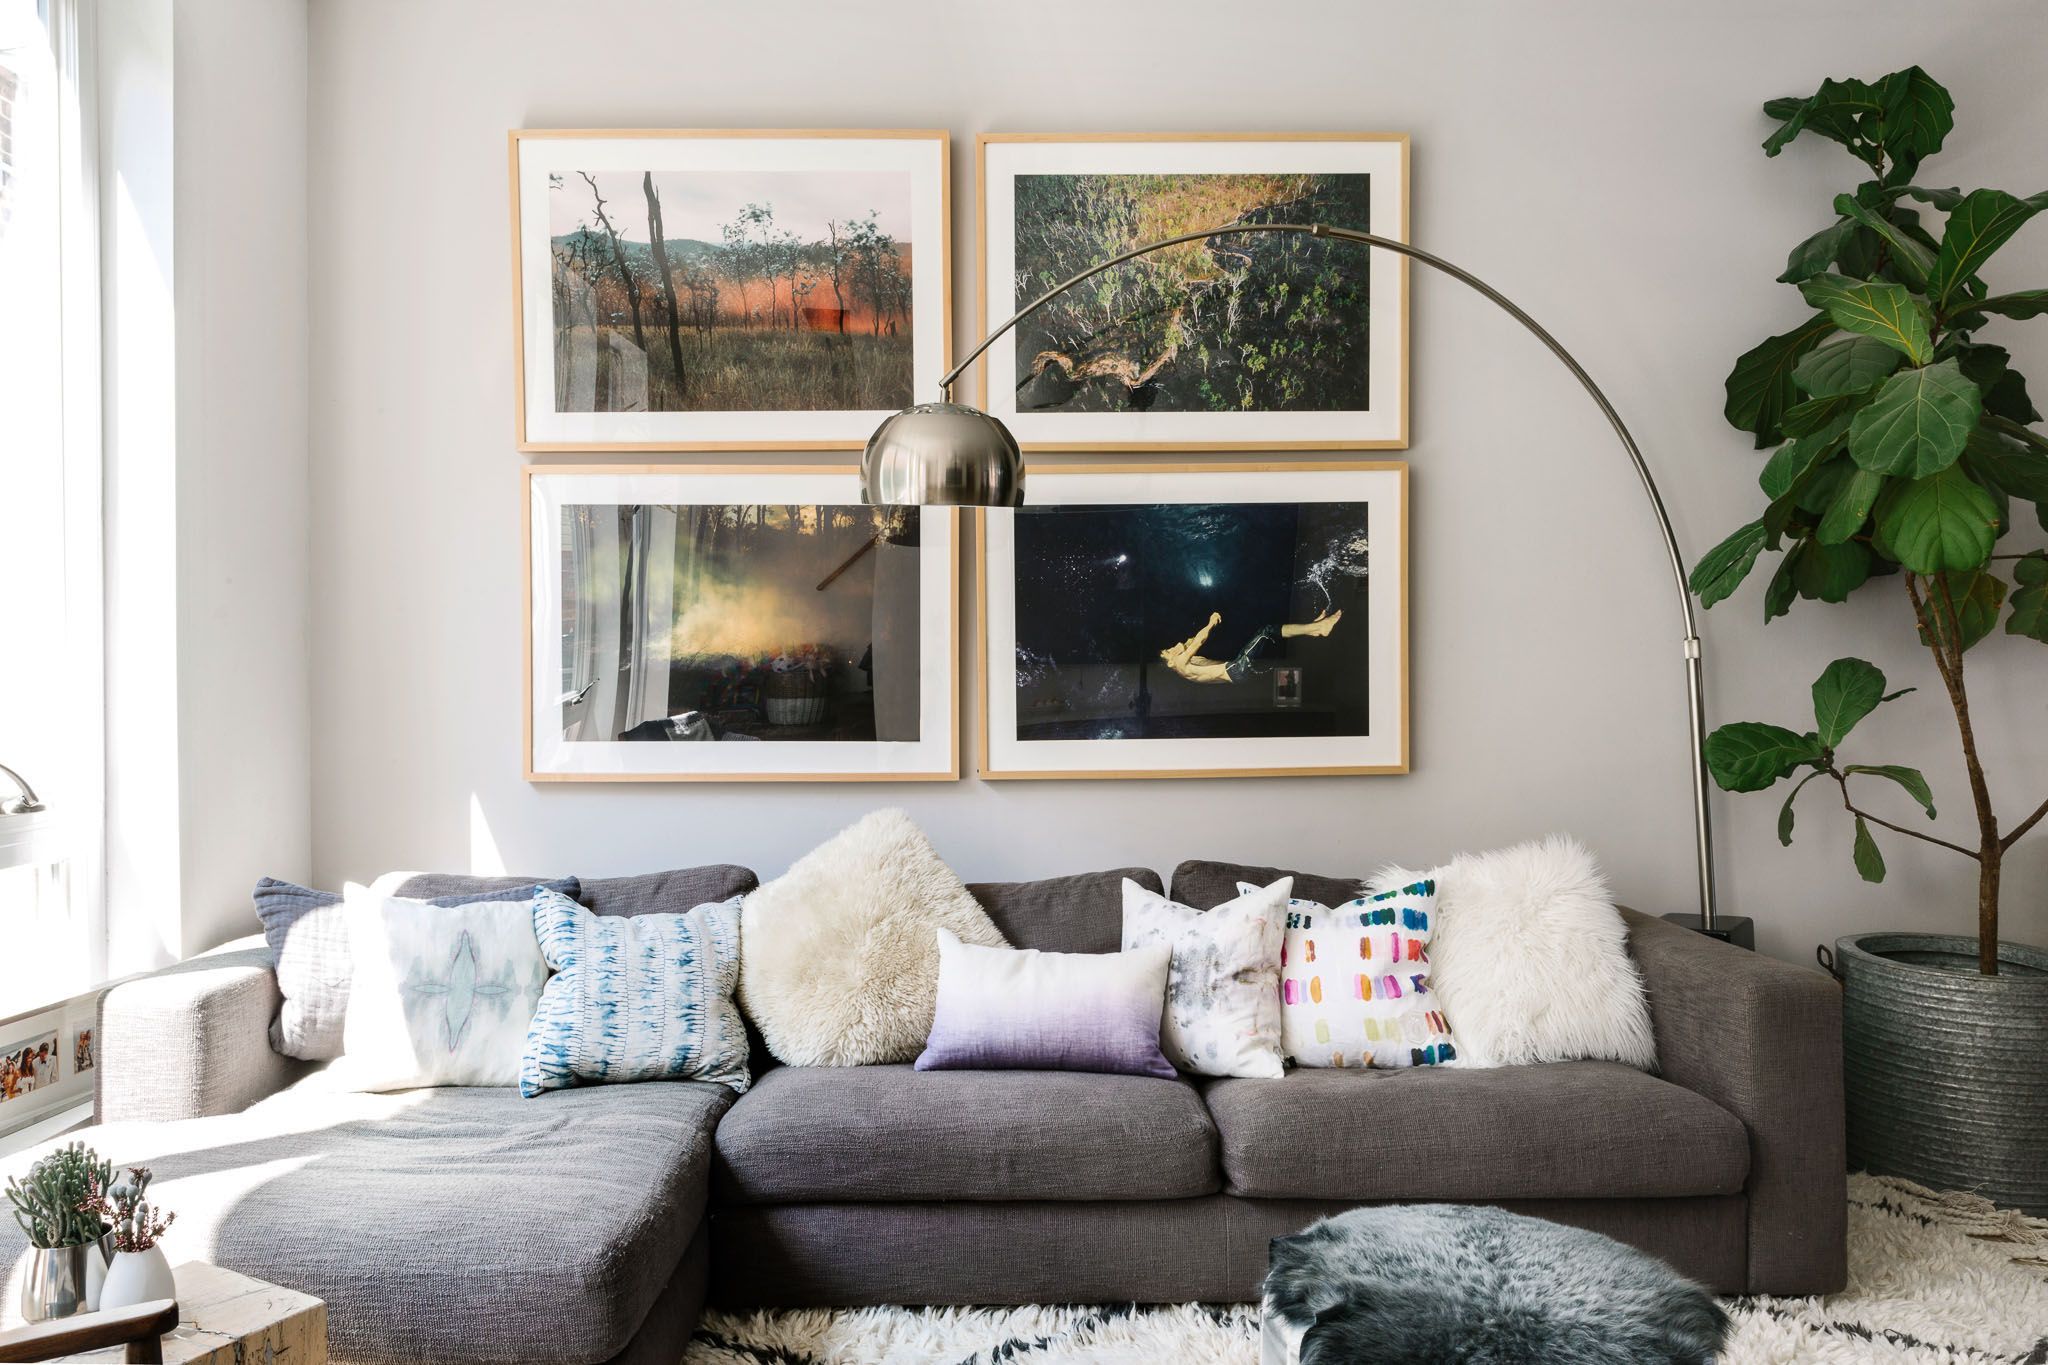 14 Cozy Living Room & Bedroom Ideas - How to Design a Warm Room